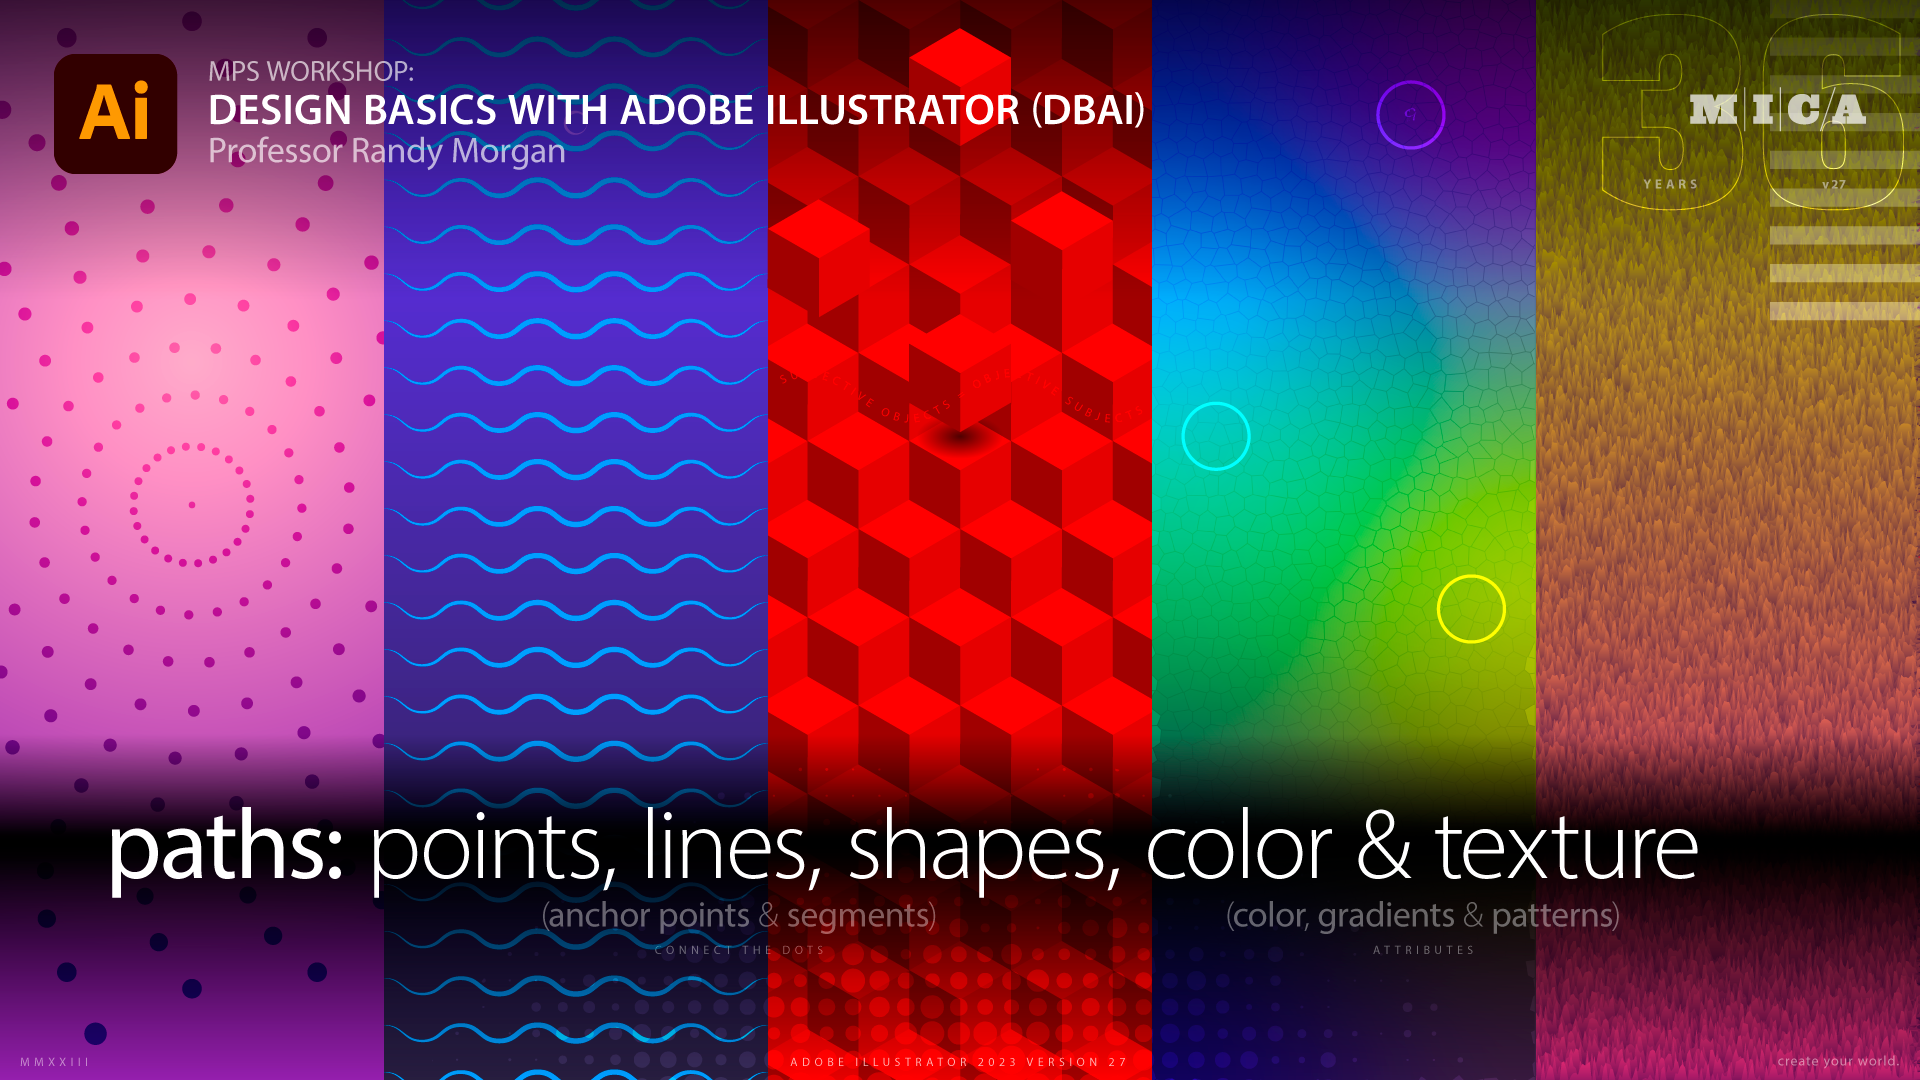 MICA MPS Workshop: Design Basics with Adobe Illustrator (DBAI), Fall 2023 hero image.